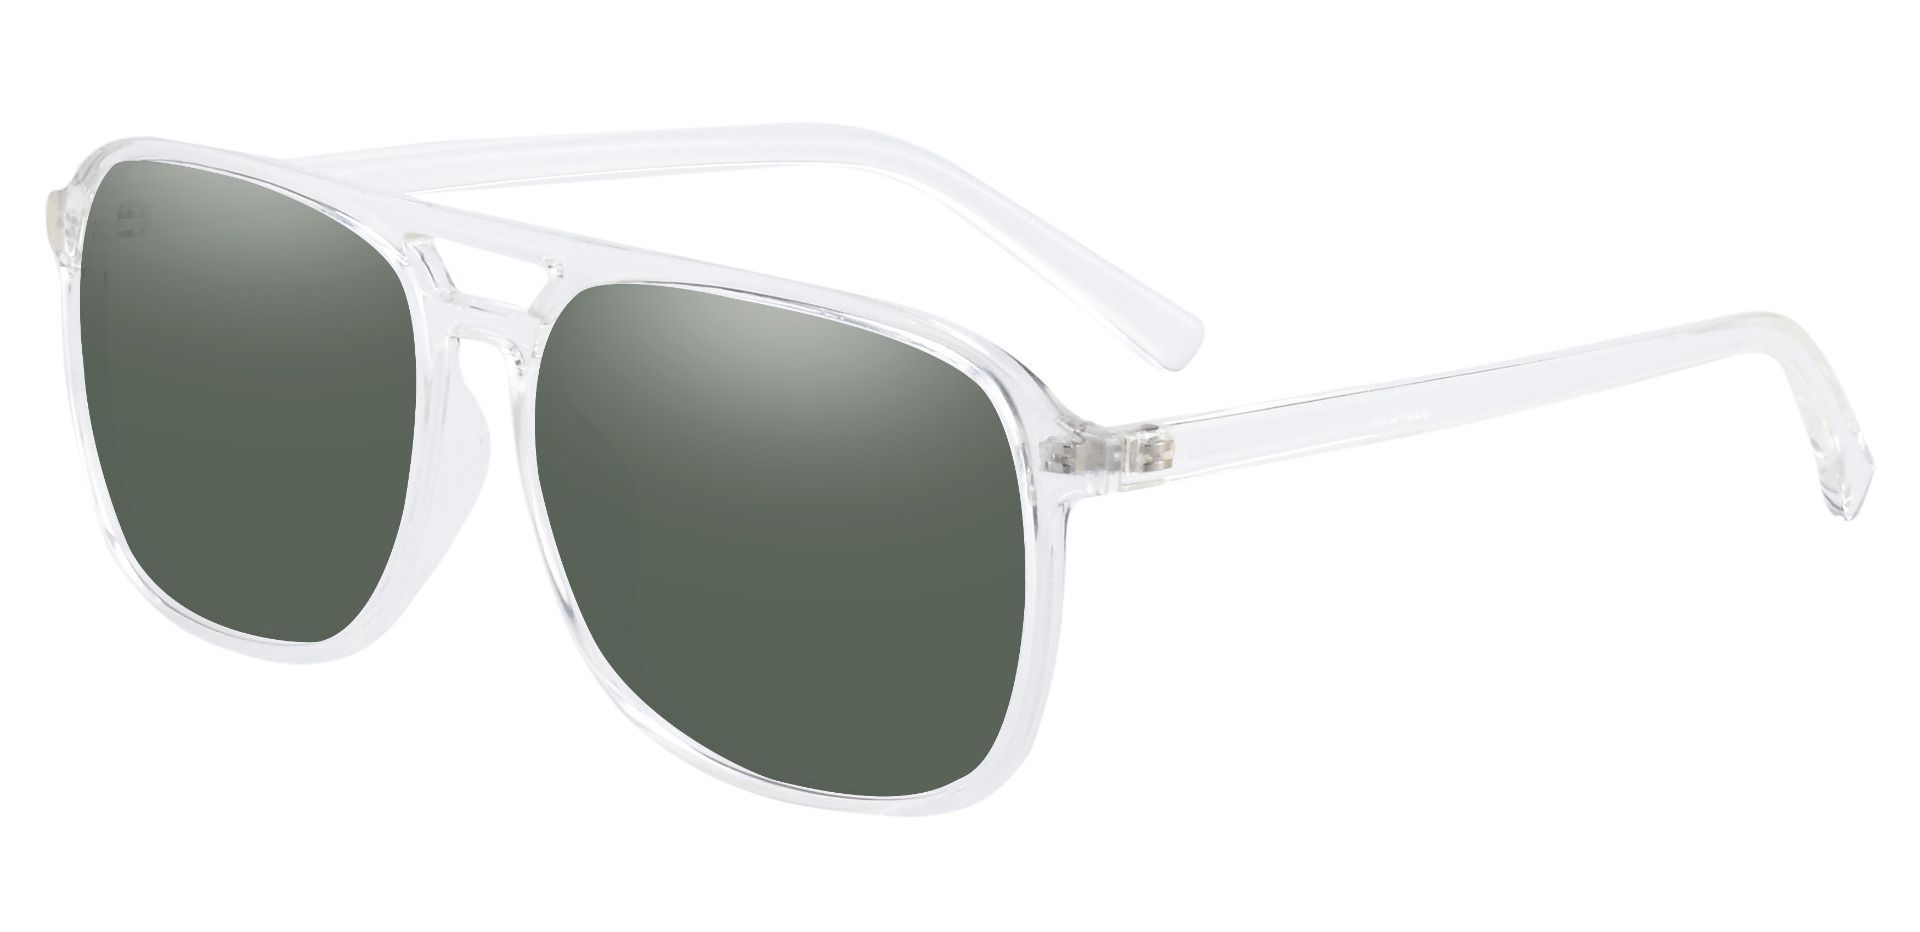 Edward Aviator Prescription Sunglasses - Clear Frame With Green Lenses